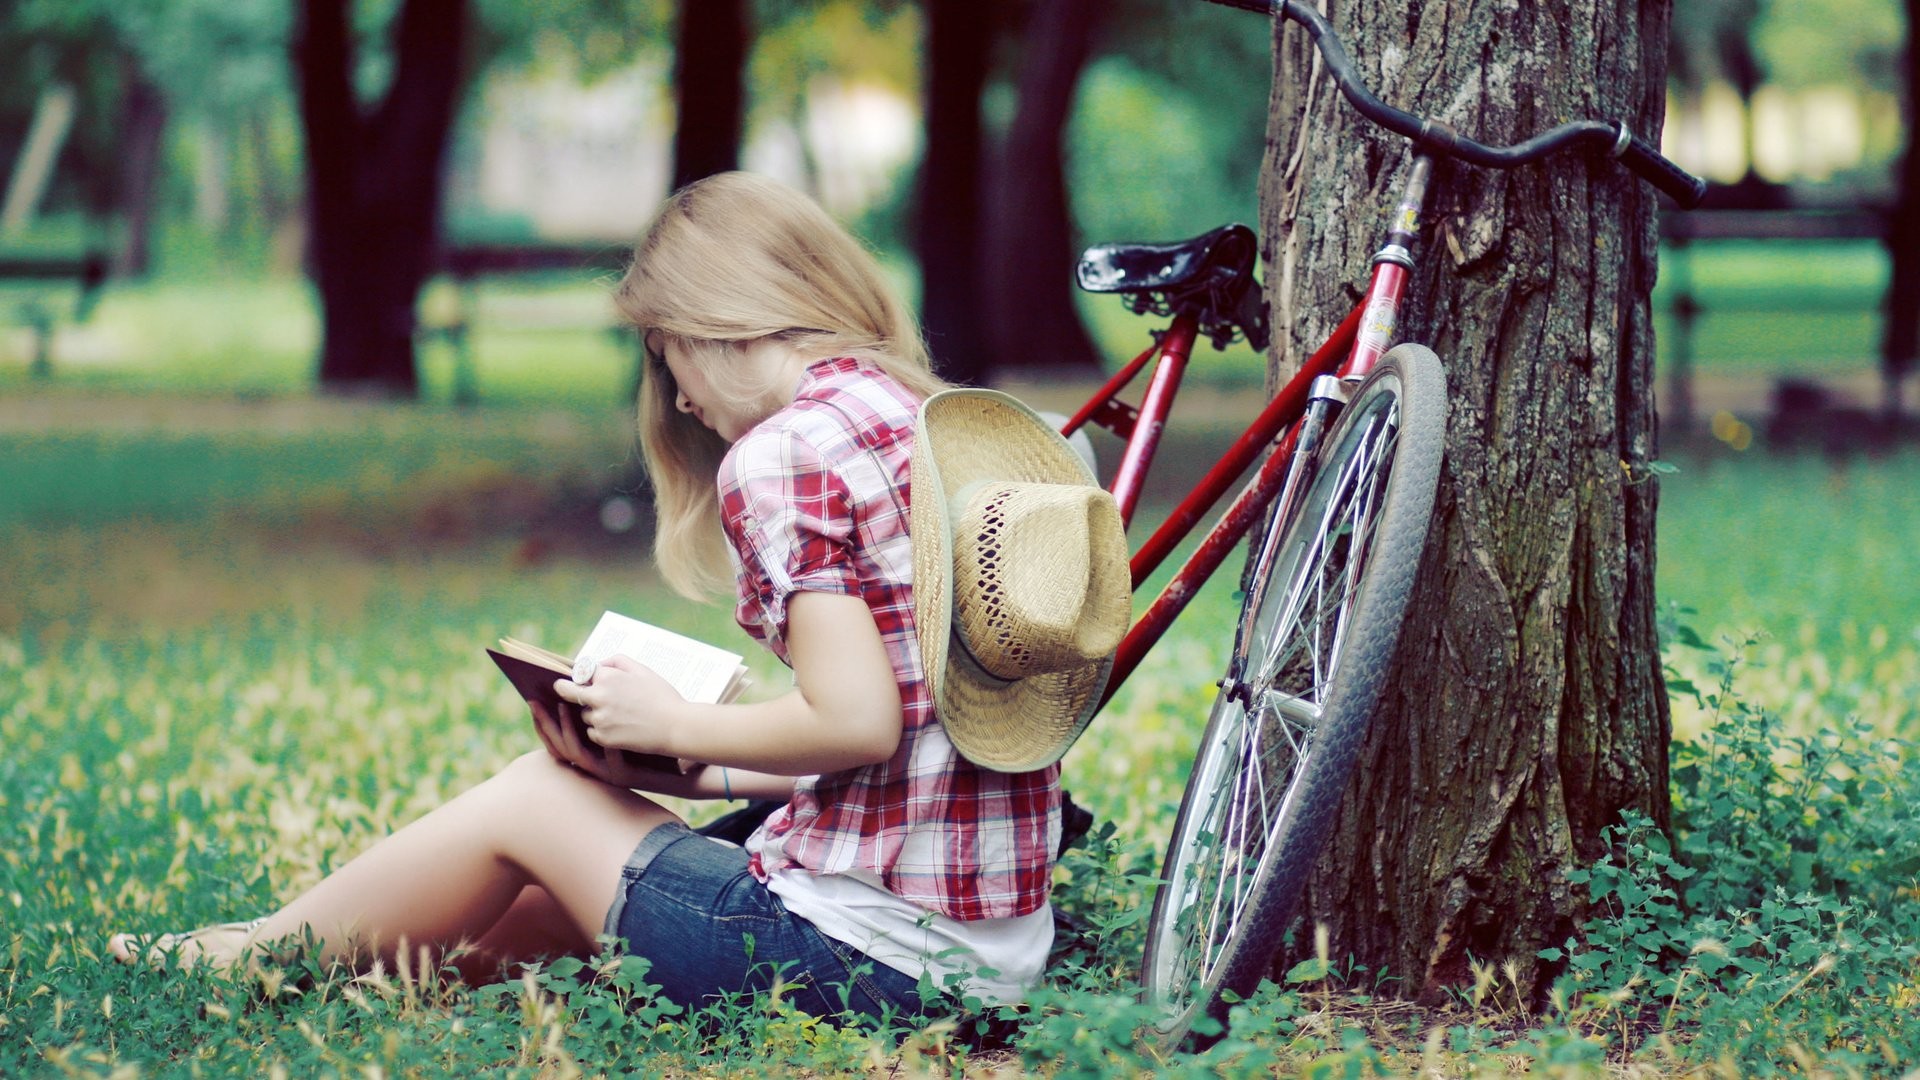 women model blonde women outdoors sitting reading jean shorts shirt cowboy hats bicycle trees park grass Wallpaper